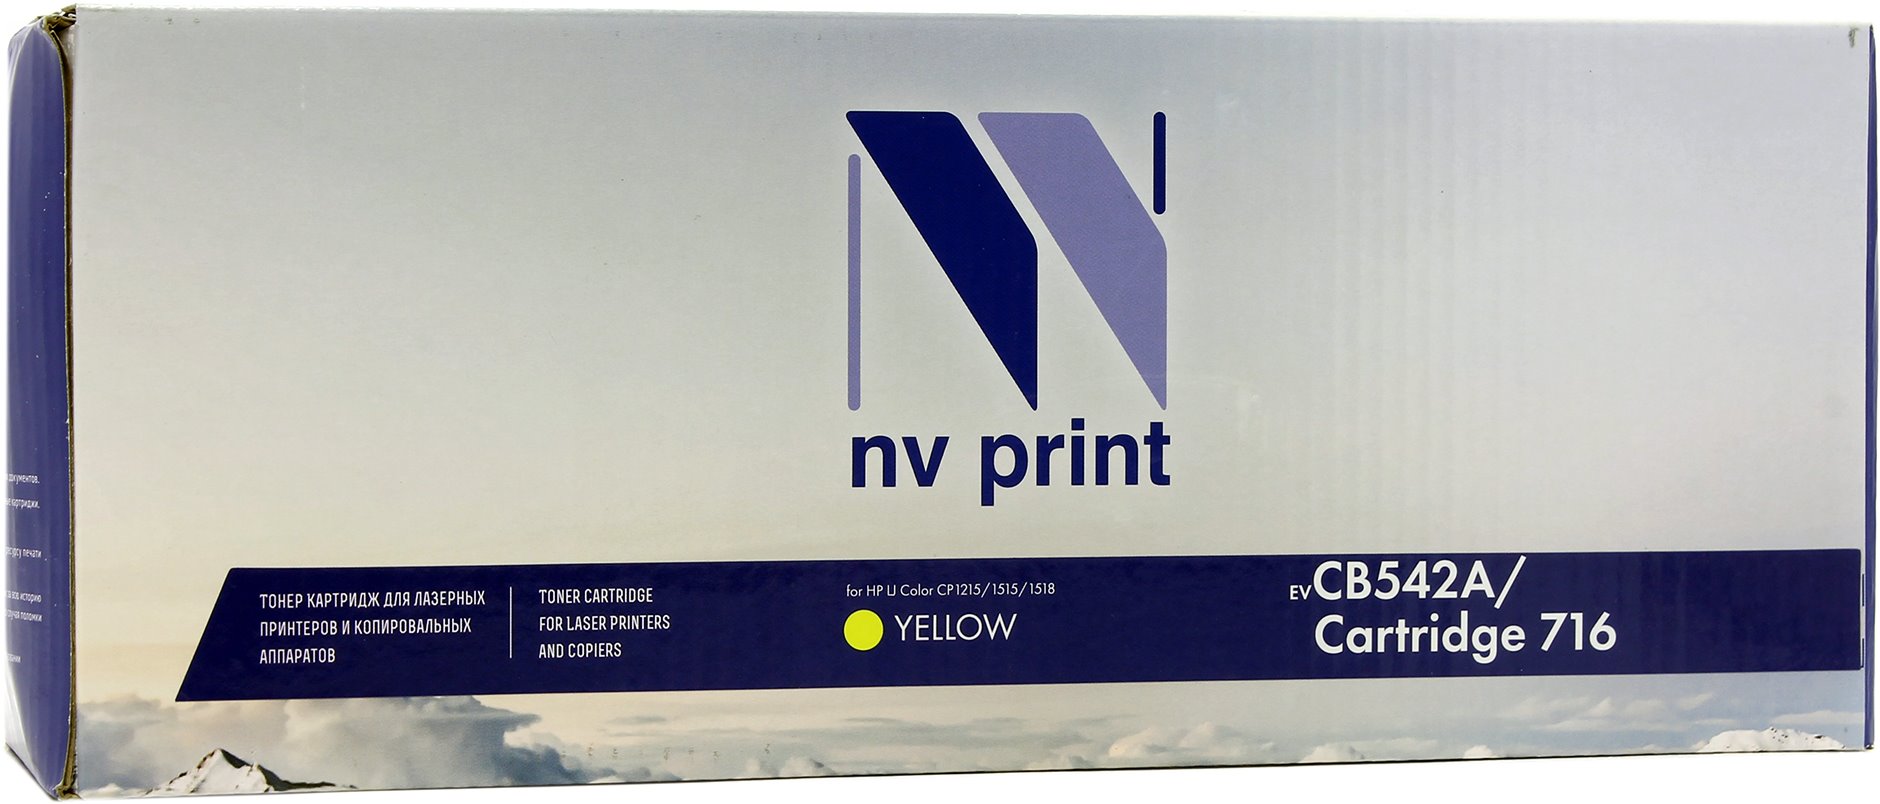   NV-Print  HP Color LaserJet CP1215/1515/ CM1312 Yellow, CB542A